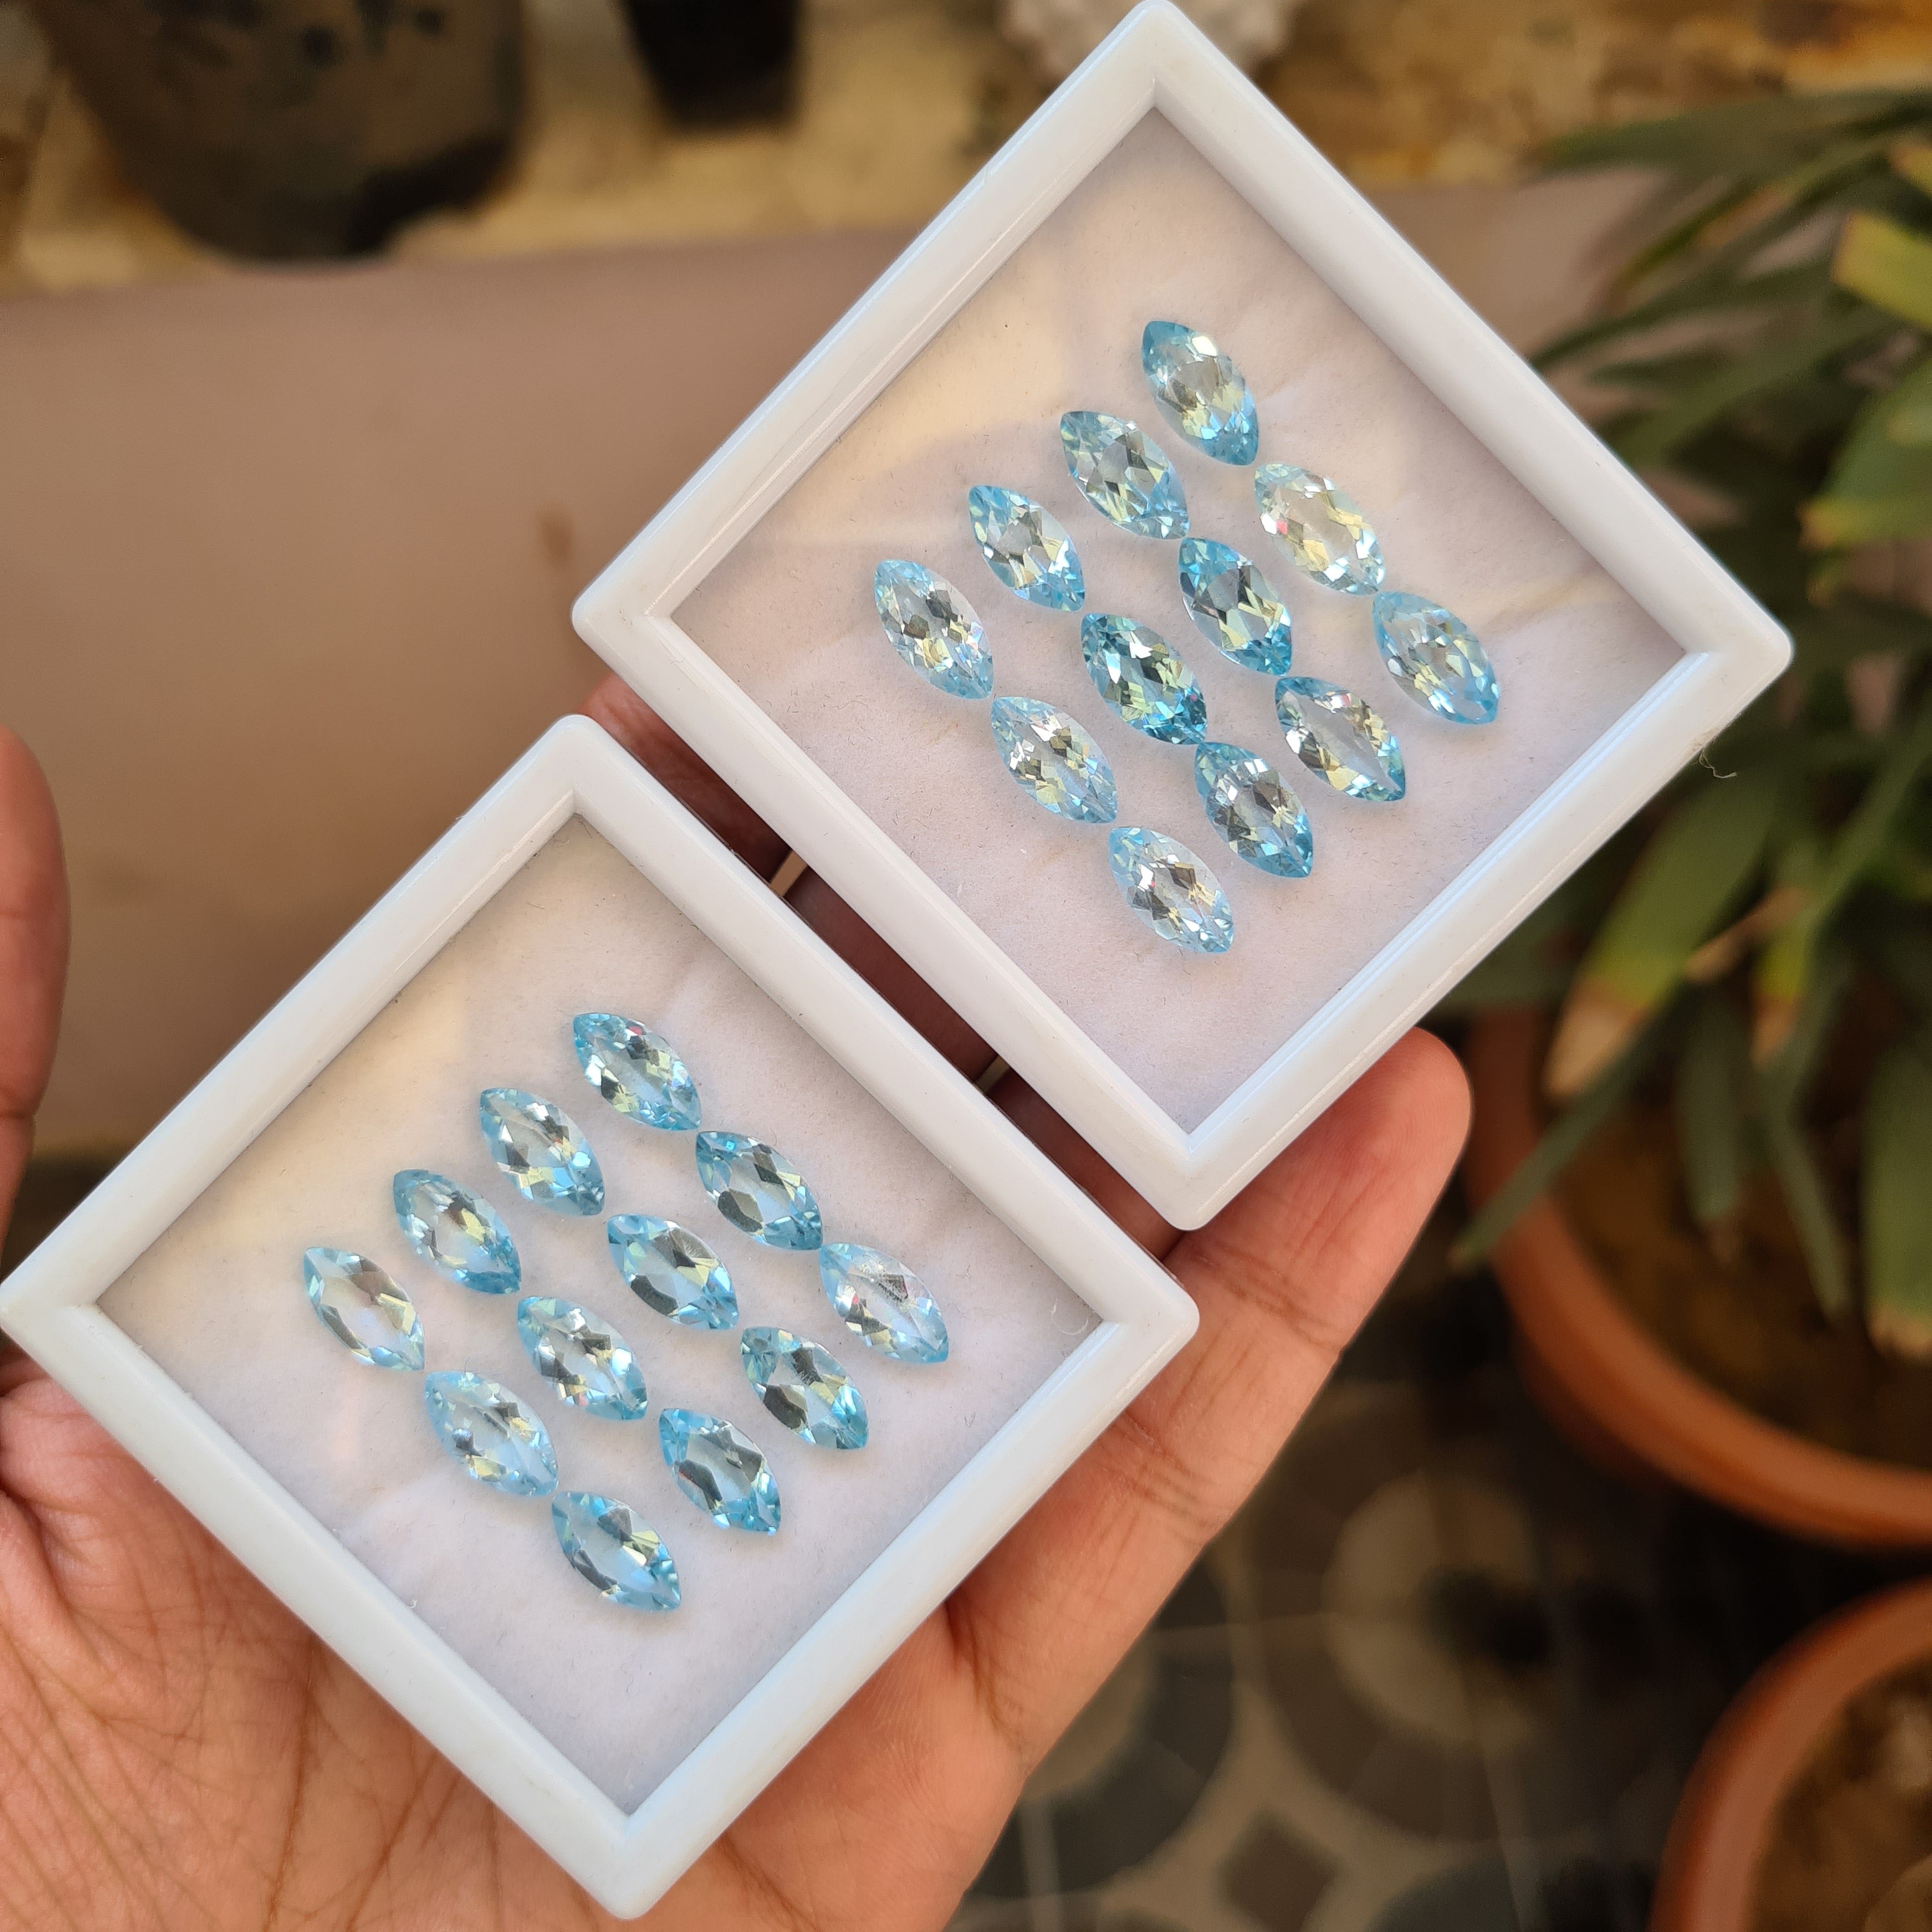 BOGO: 12 Pcs Natural Blue Topaz Faceted Gemstones | Size: 12x6mm, Marquise Shape - The LabradoriteKing